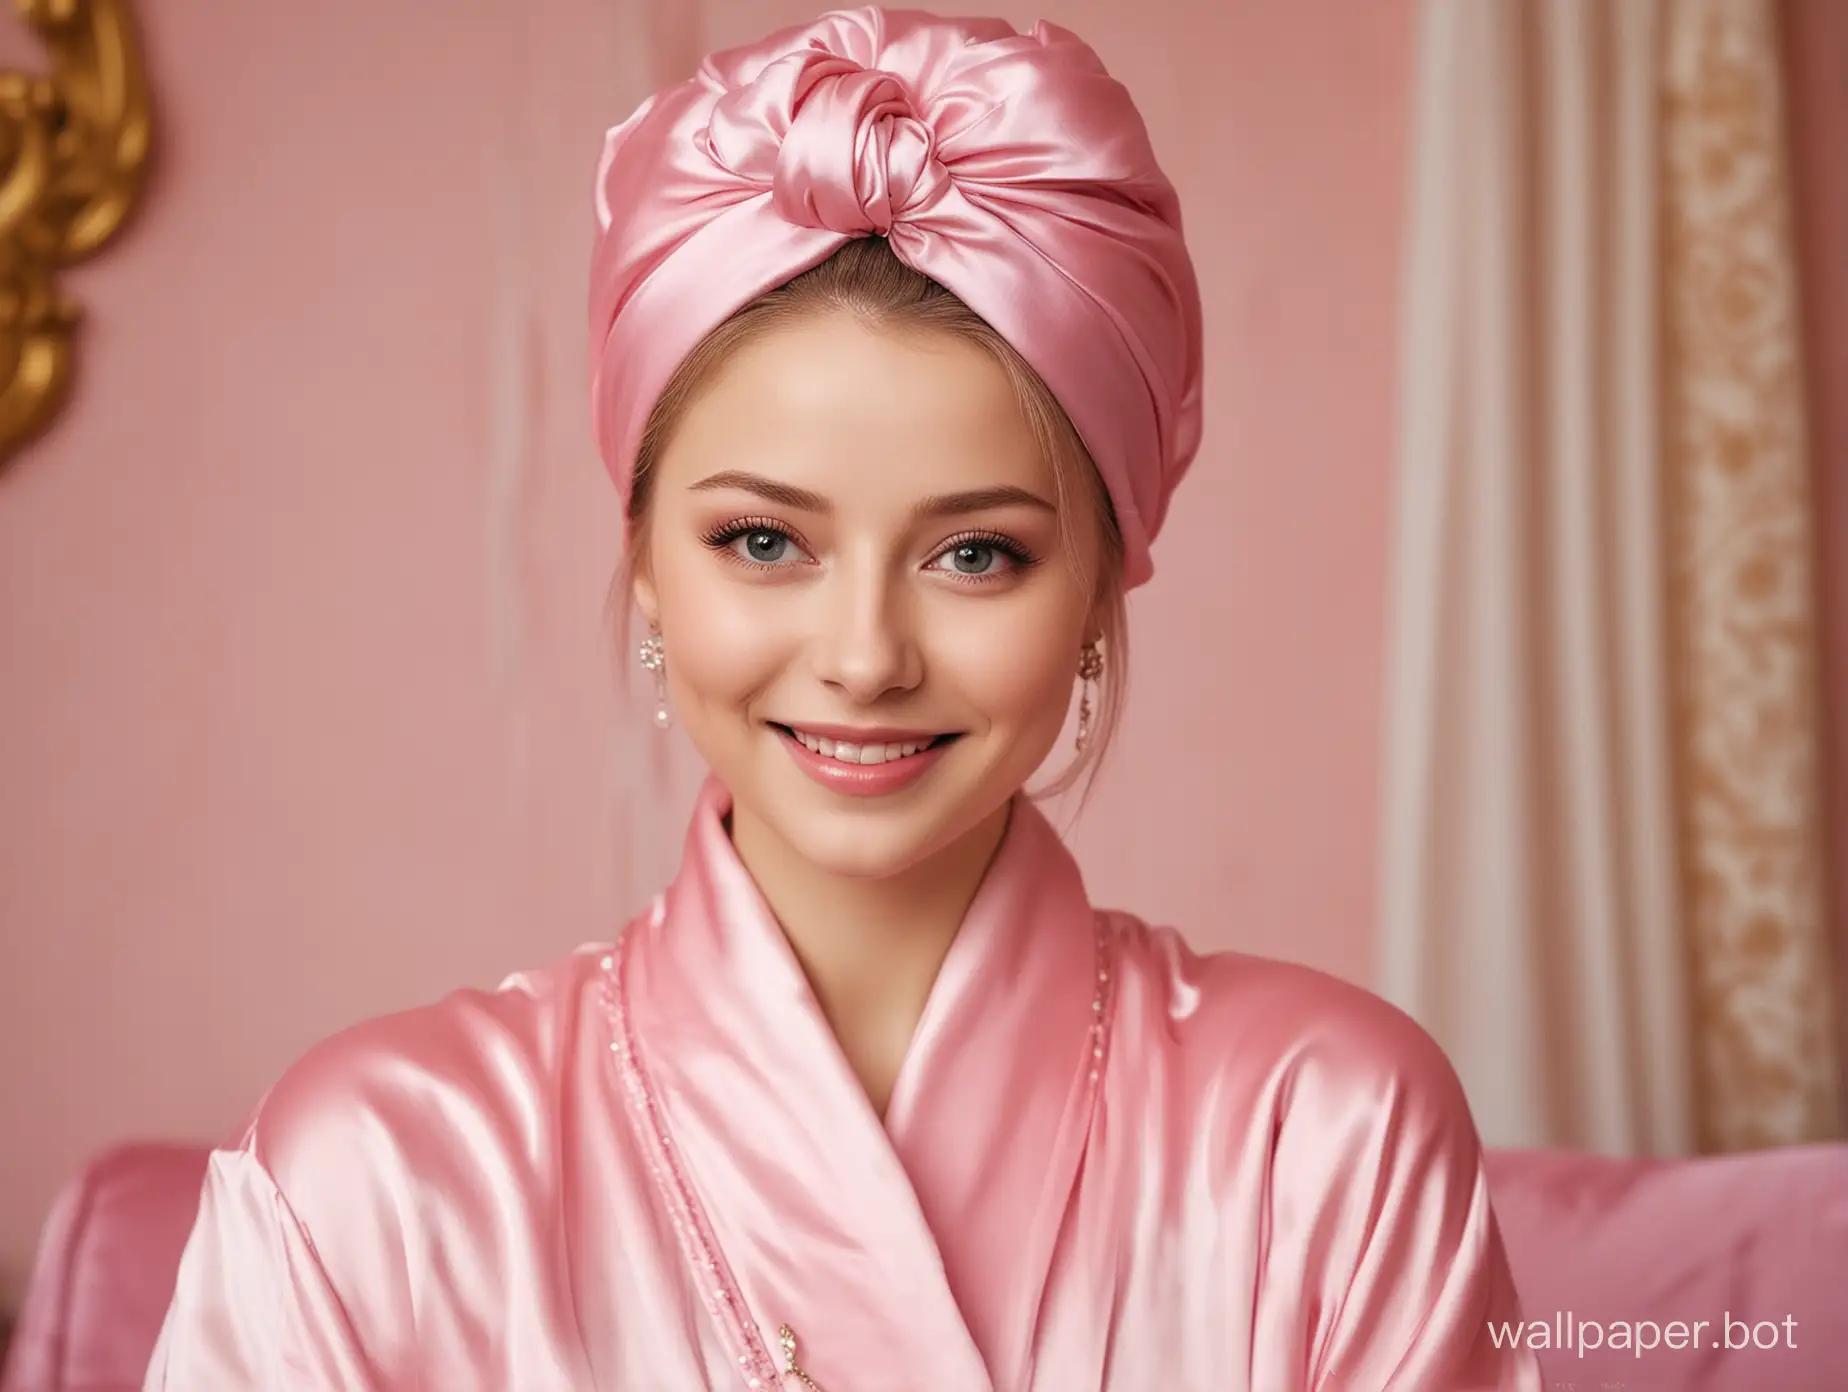 Glamorous-Portrait-of-Young-Queen-Yulia-Lipnitskaya-in-Luxurious-Pink-Silk-Robe-and-Turban